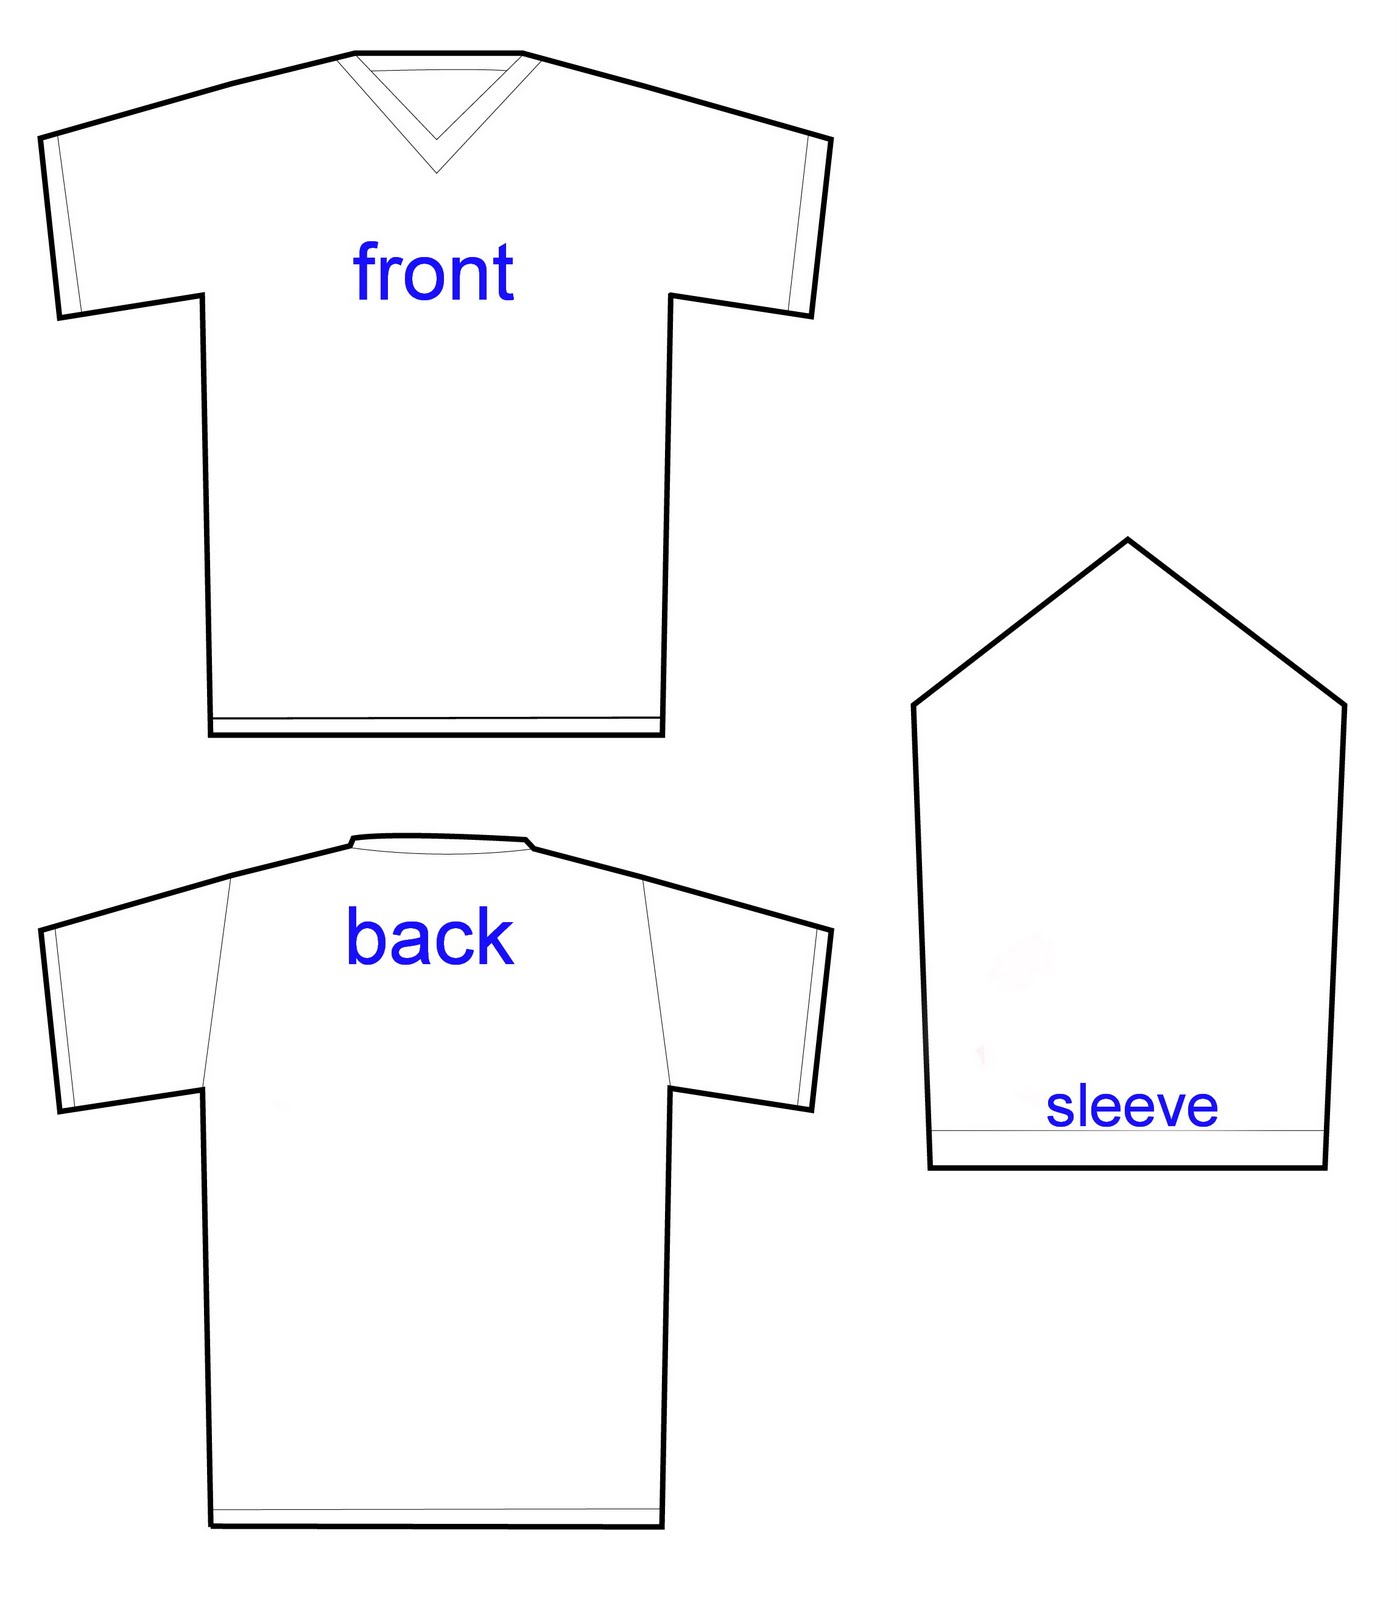 Tshirt Design Template Cliparts.co